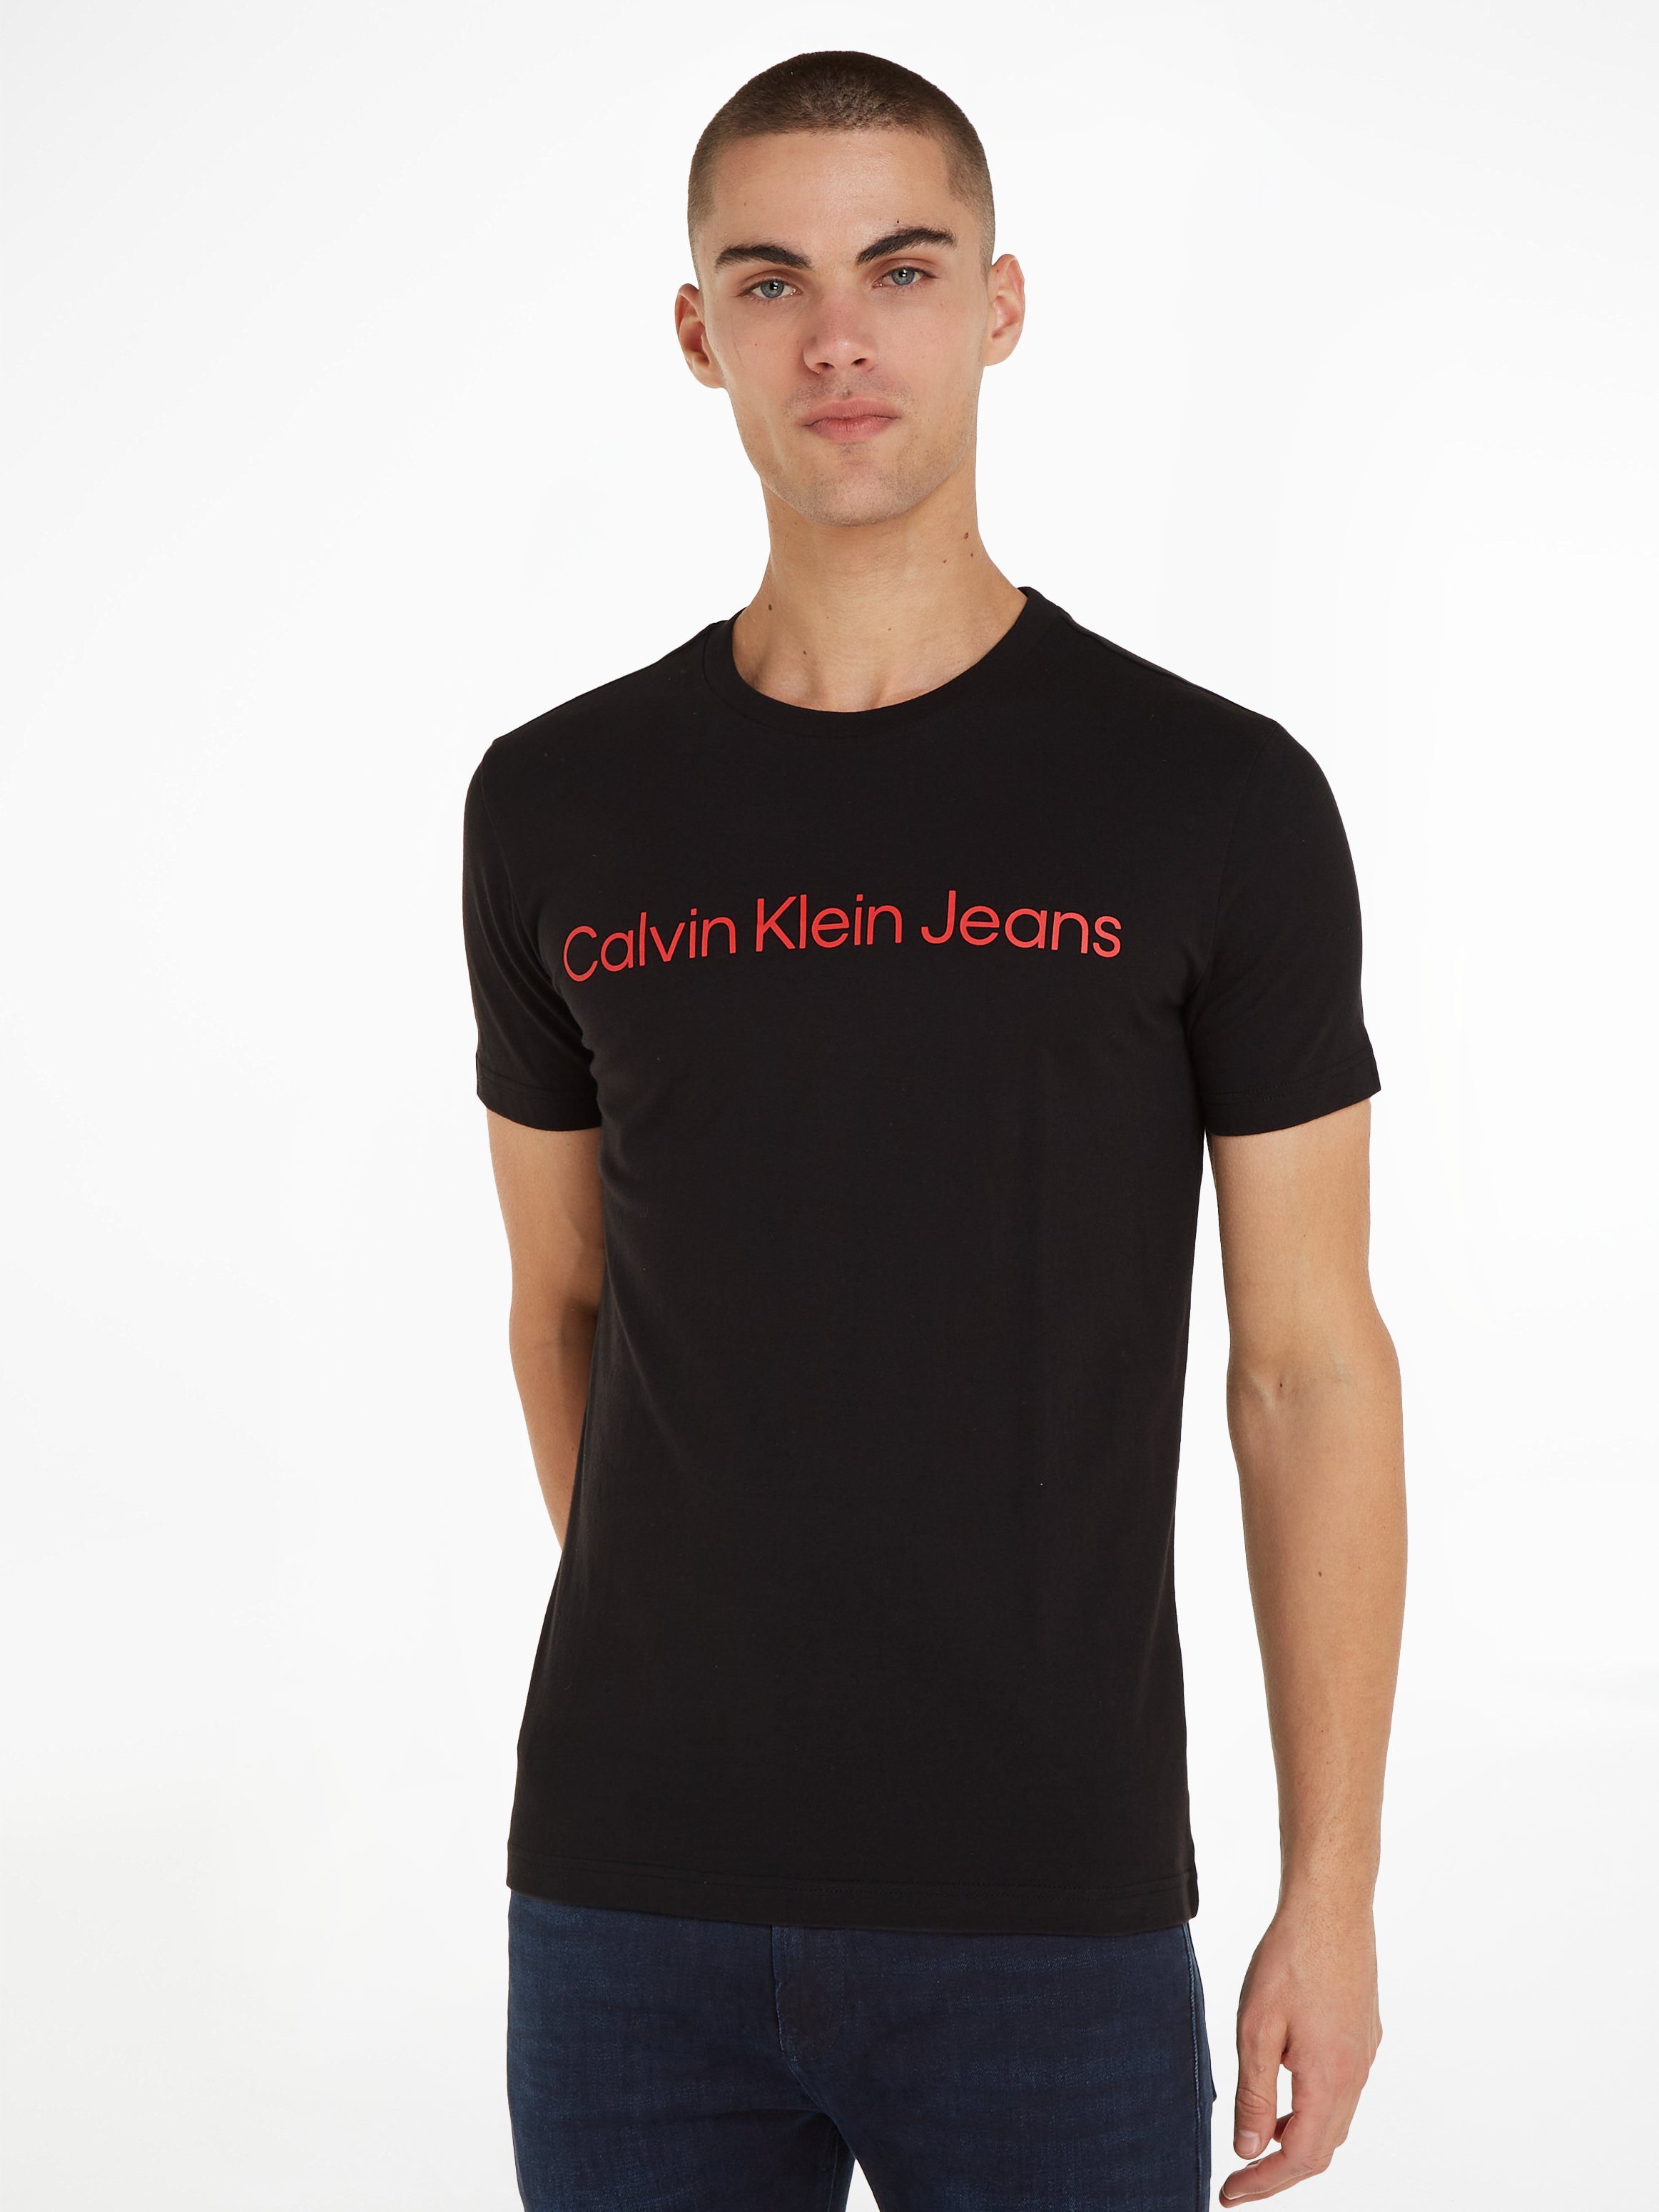 Jeans T-Shirt TEE CORE Klein SLIM INSTITUTIONAL LOGO Calvin